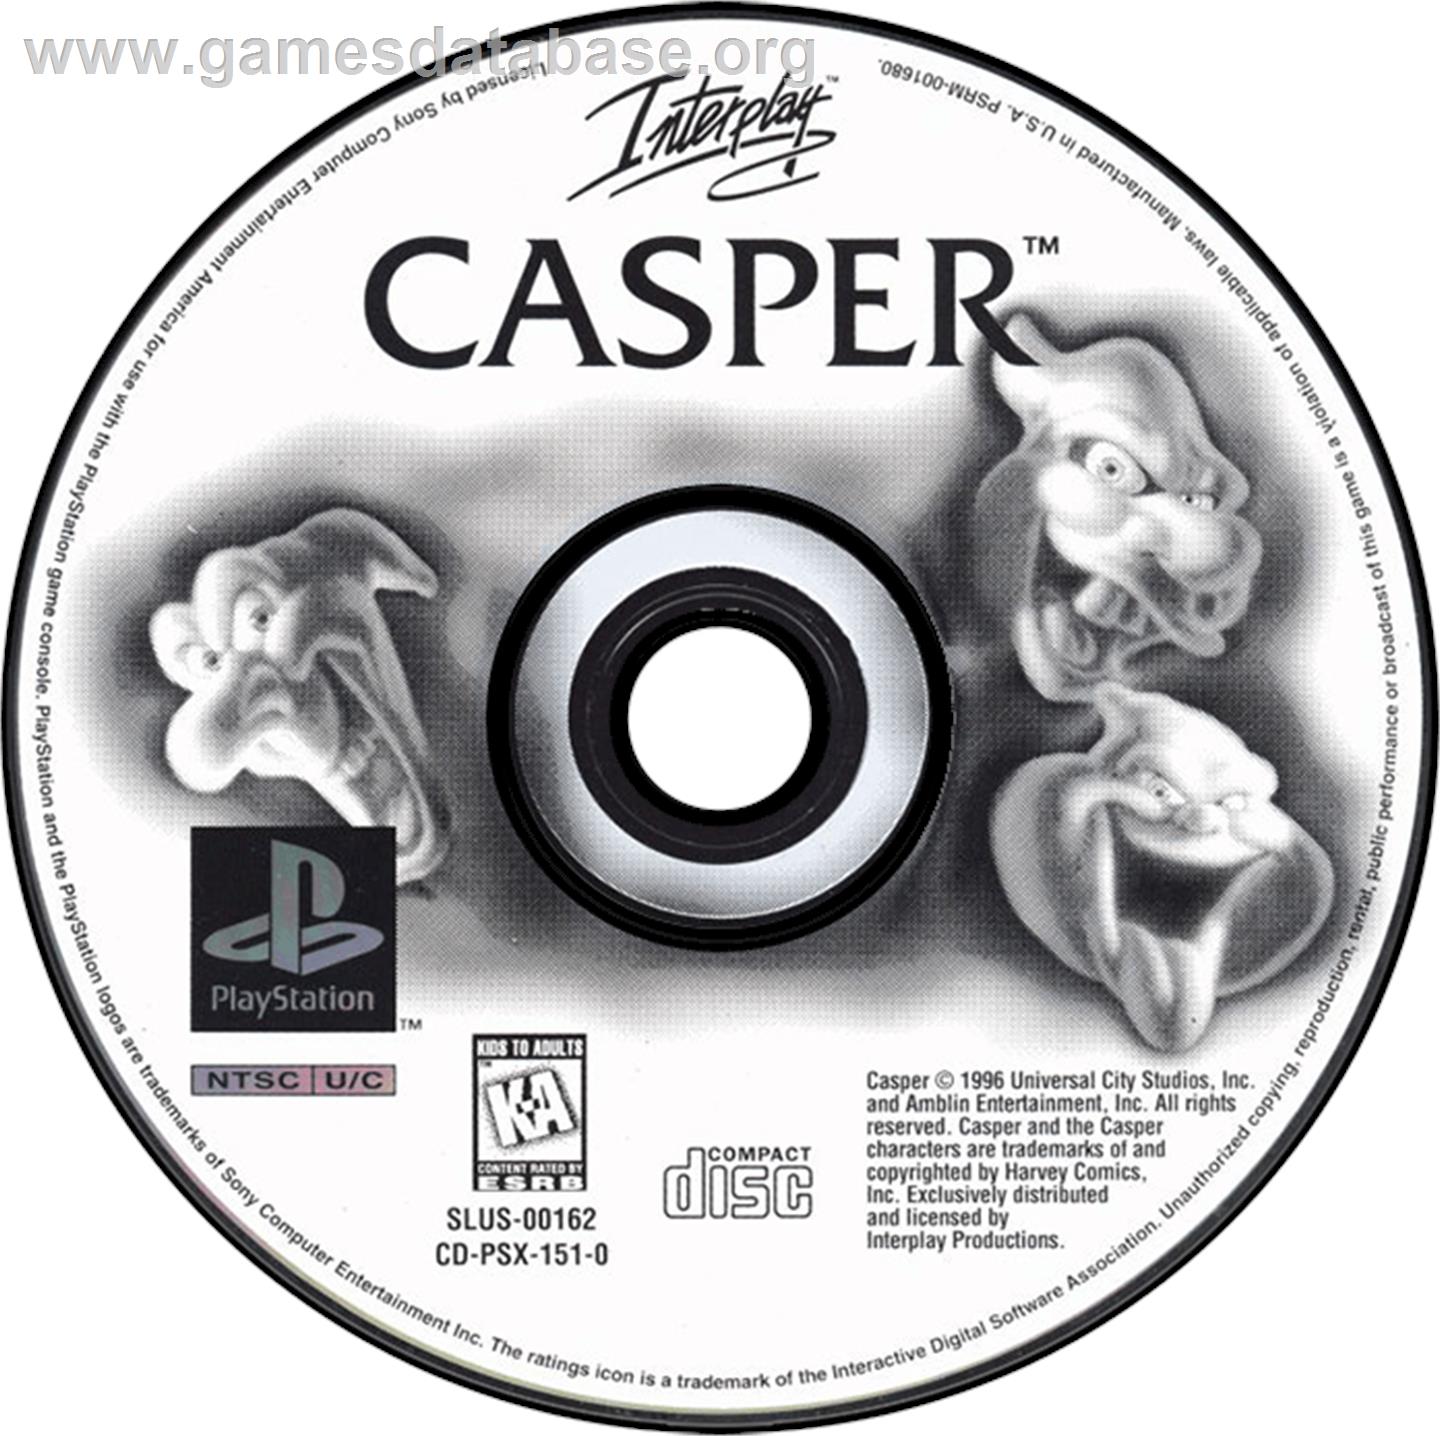 Casper - Sony Playstation - Artwork - Disc